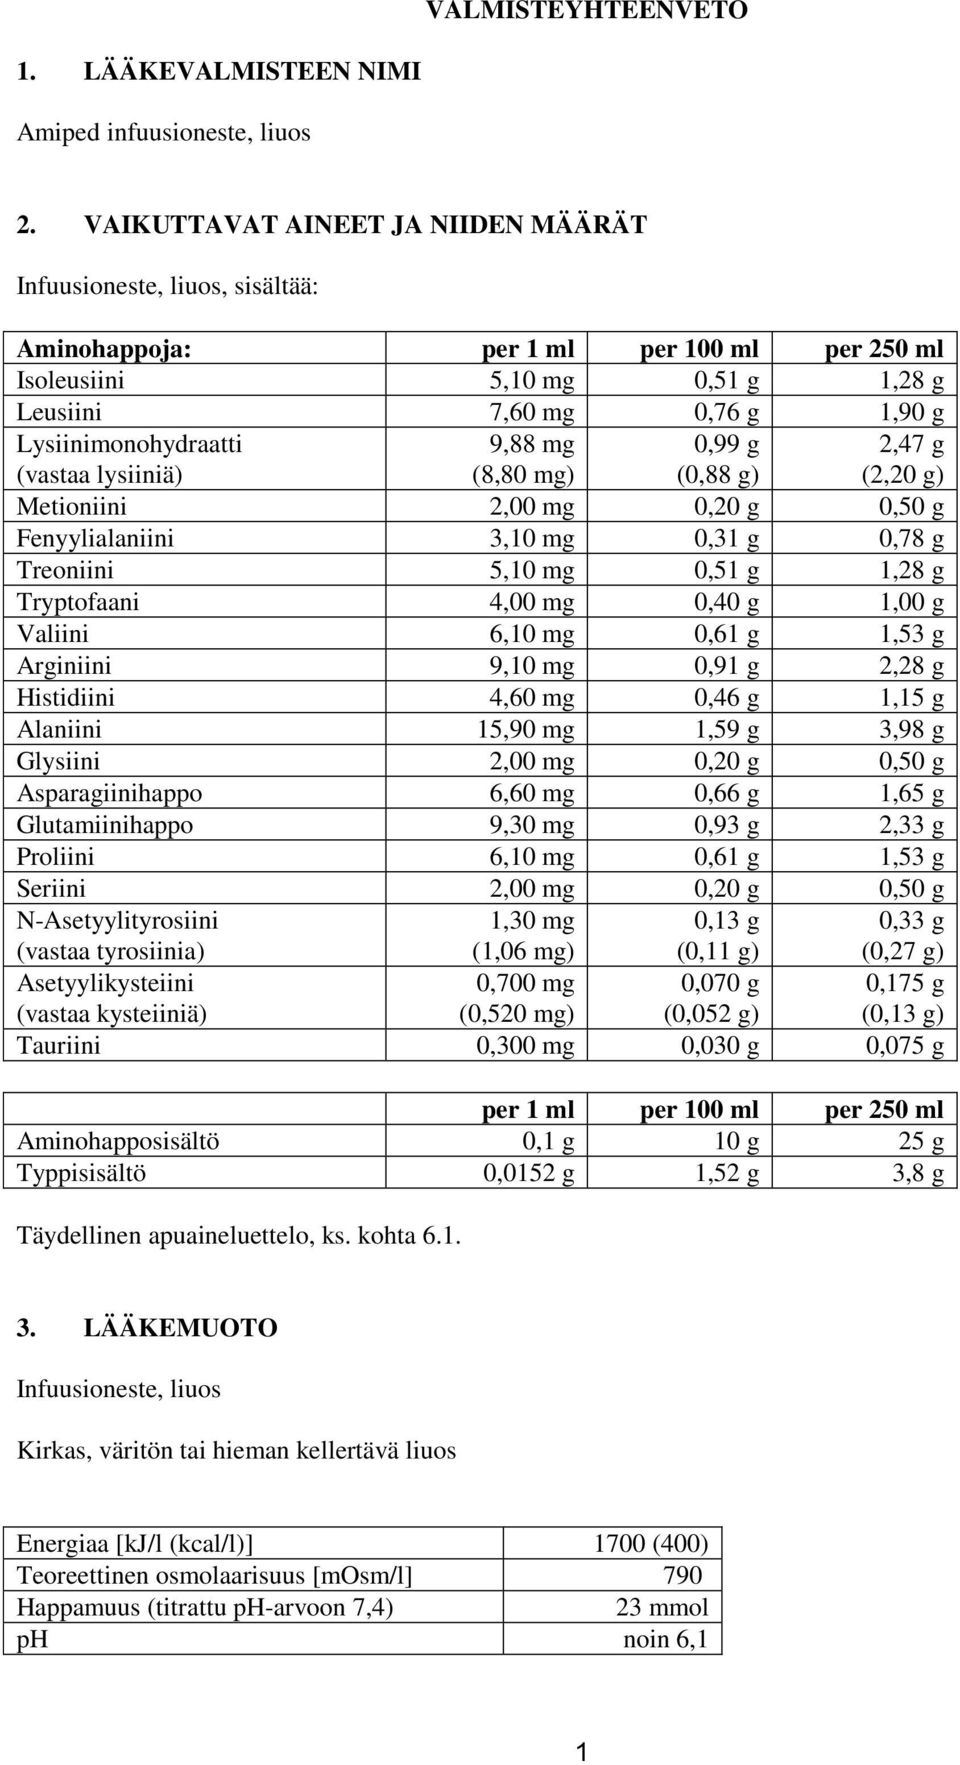 (vastaa lysiiniä) 9,88 mg (8,80 mg) 0,99 g (0,88 g) 2,47 g (2,20 g) Metioniini 2,00 mg 0,20 g 0,50 g Fenyylialaniini 3,10 mg 0,31 g 0,78 g Treoniini 5,10 mg 0,51 g 1,28 g Tryptofaani 4,00 mg 0,40 g